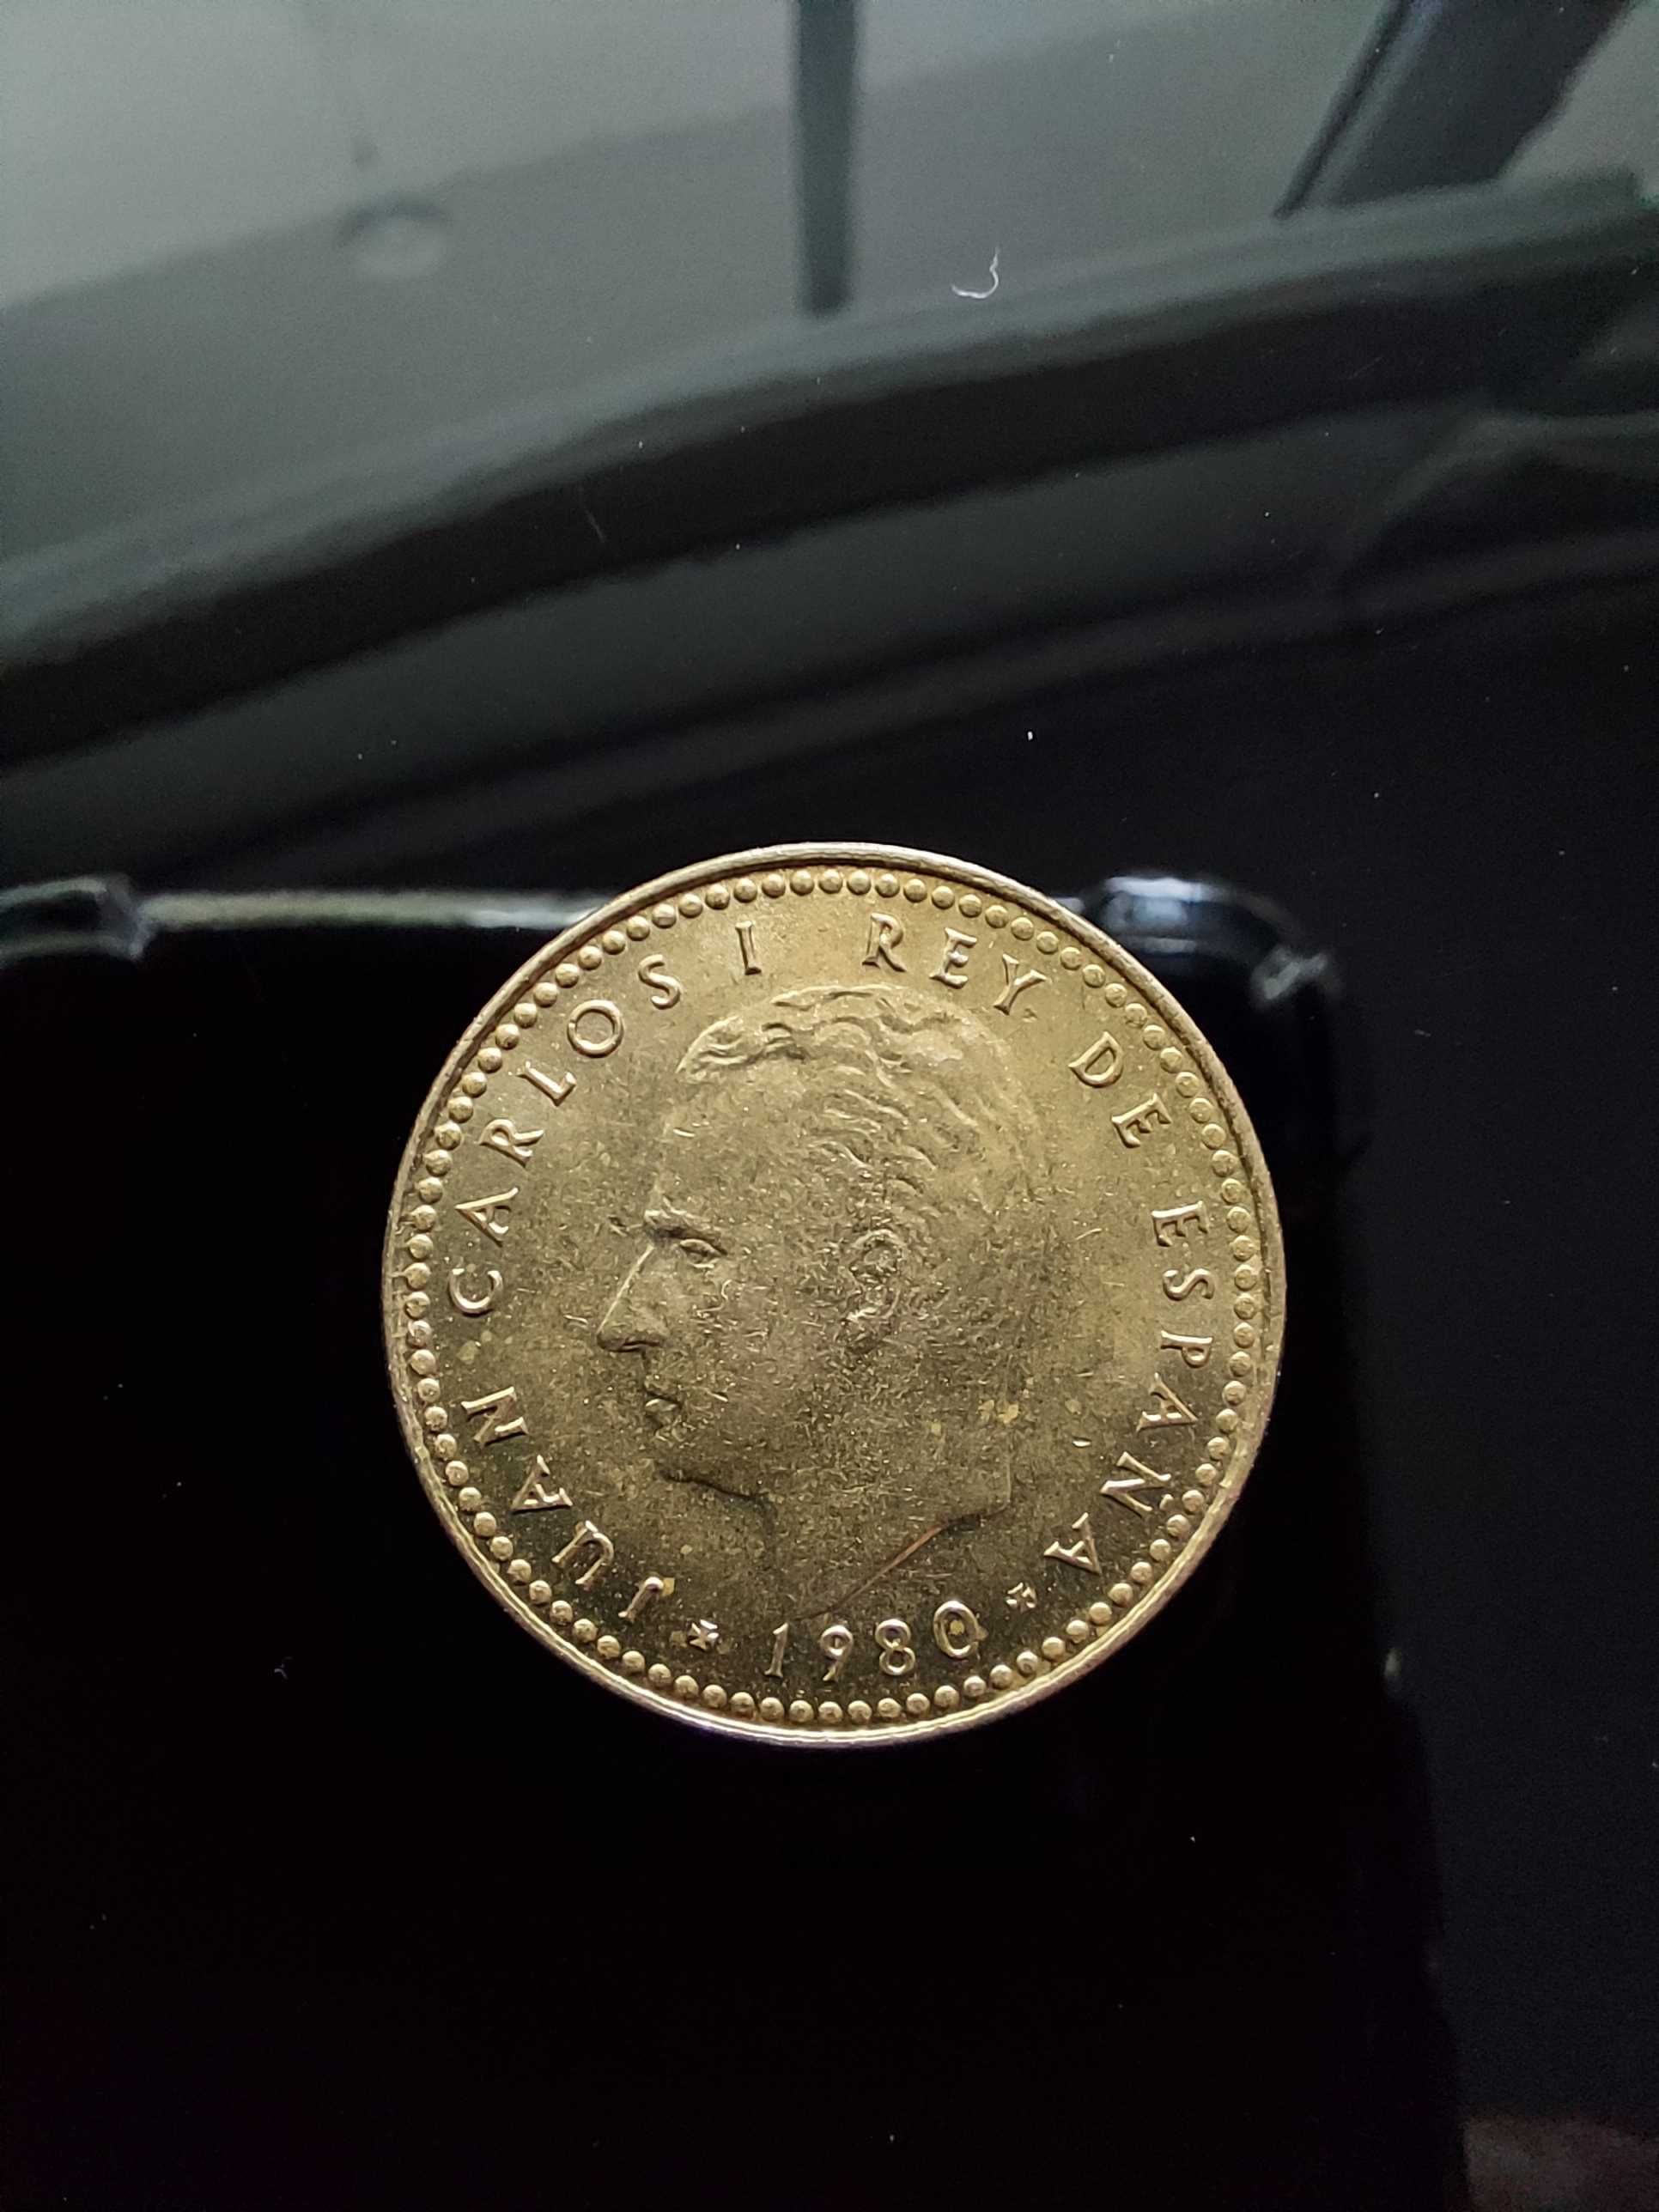 Moneta 1 peseta (PTA) hiszpańska 1980r.